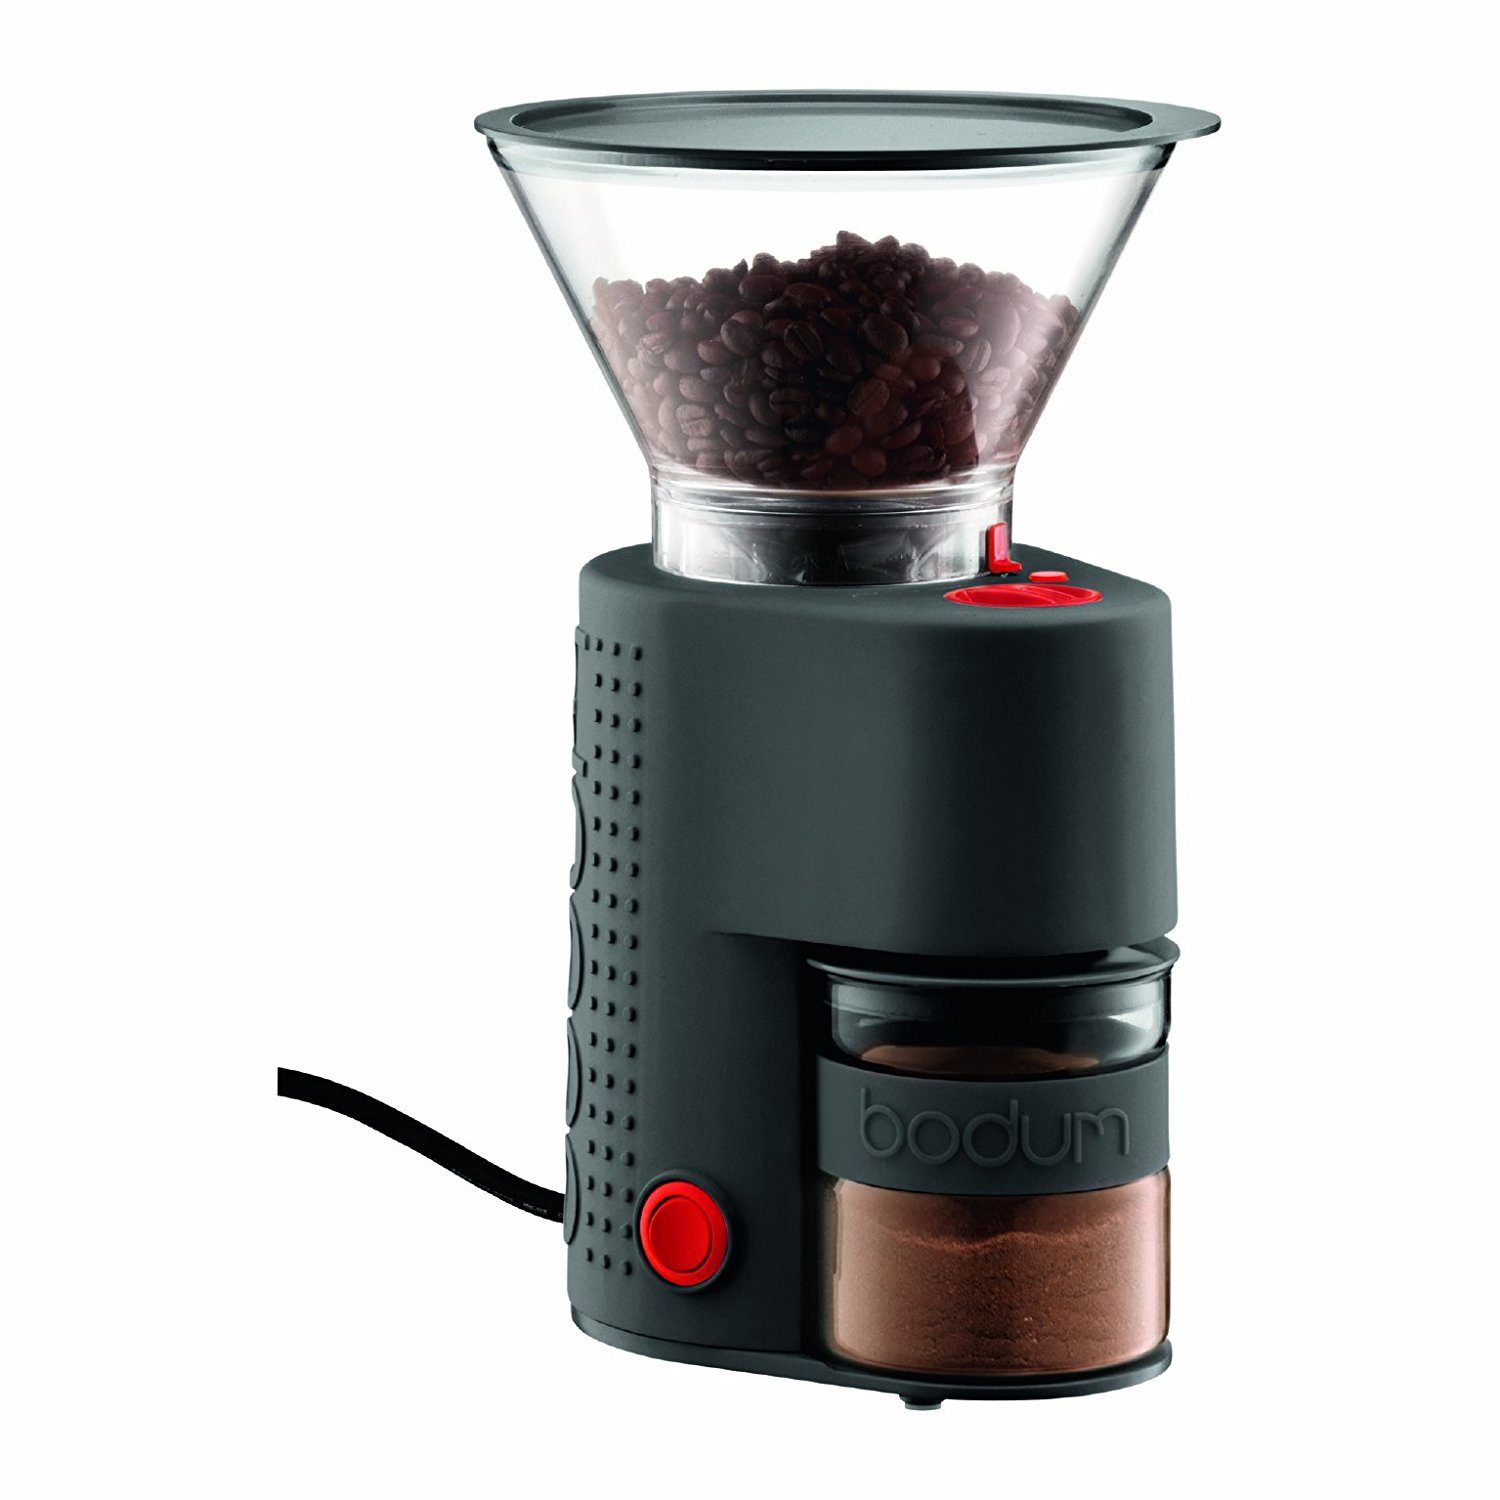 Bodum Bistro Electric Coffee Grinder Review